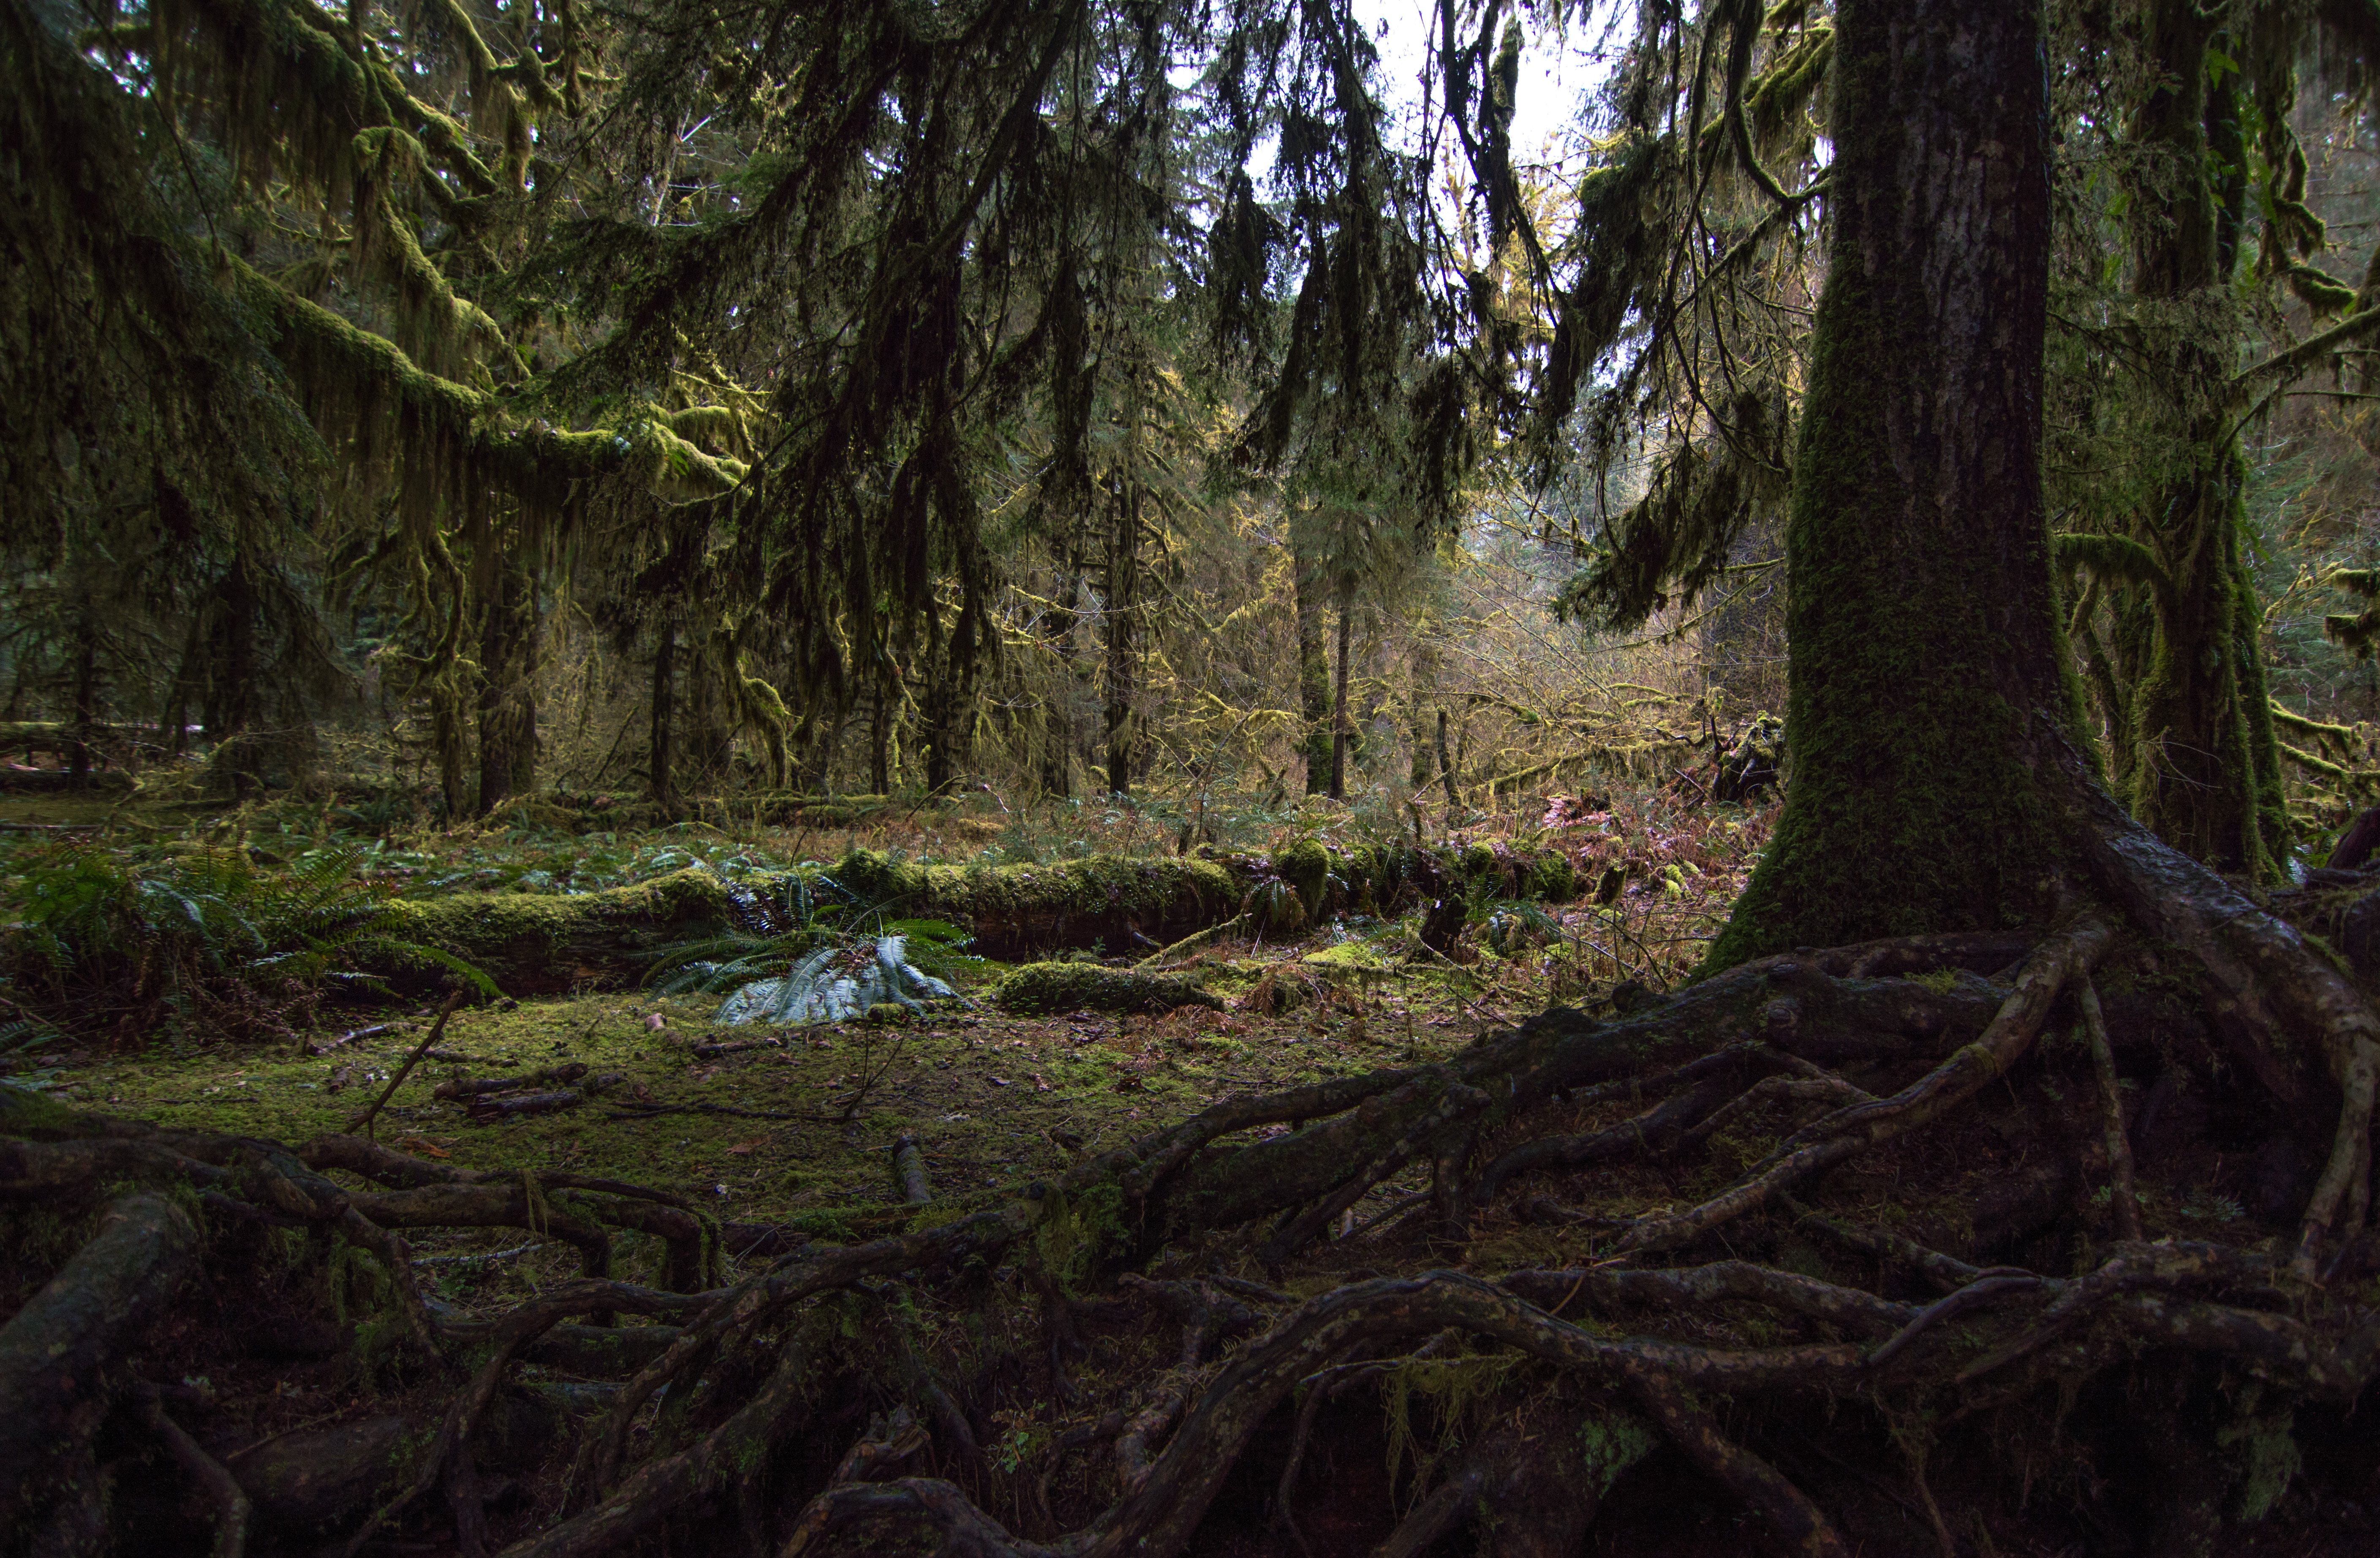 Inside of the forest scene in Forks, Washington